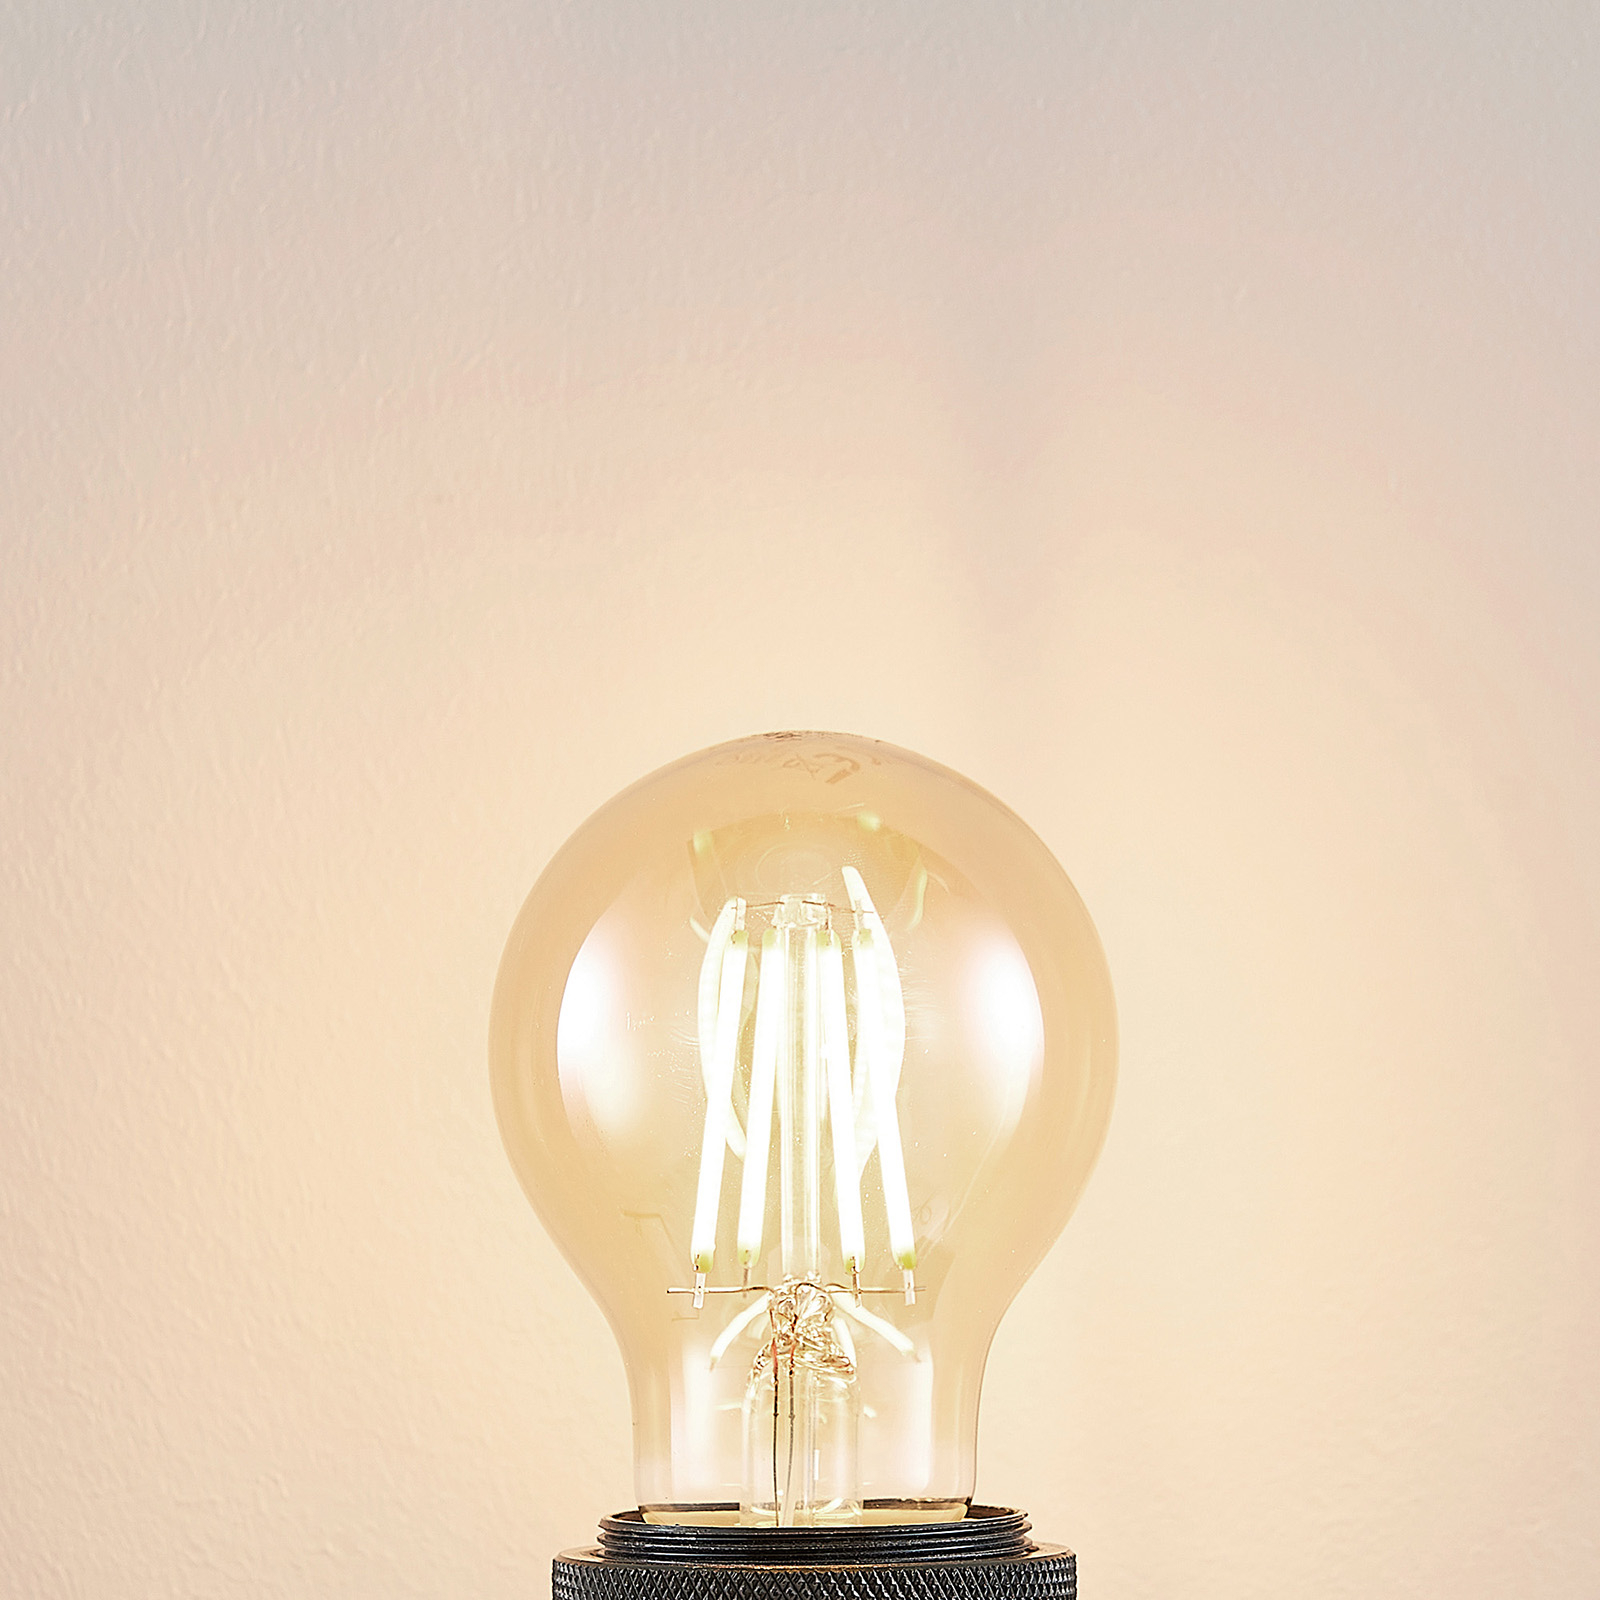 Keel molen munt LED lamp E27 A60 6,5W 2.500K amber 3-step-dimmer | Lampen24.nl